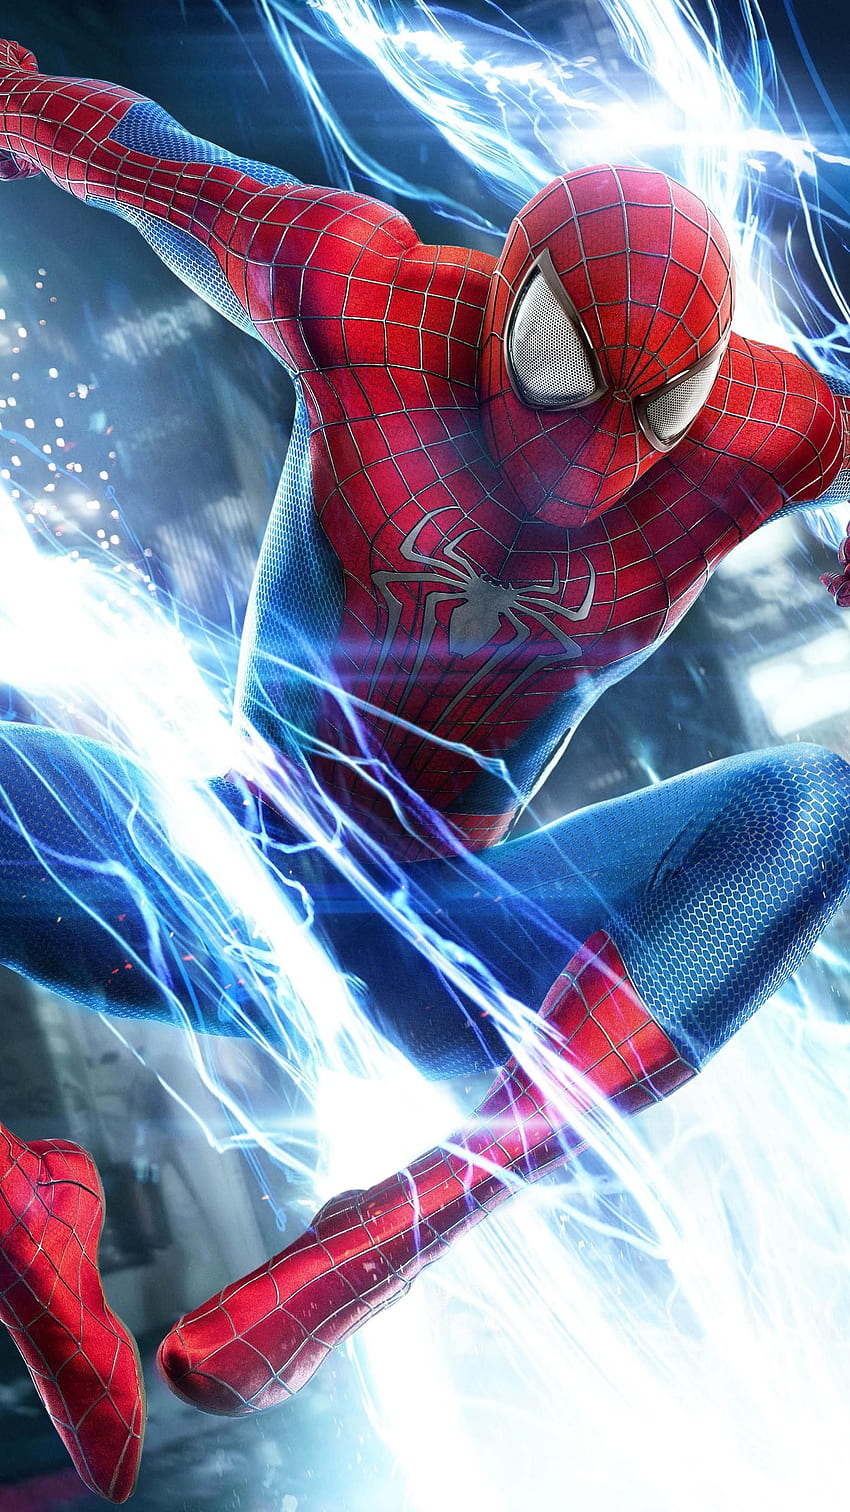 Ponsel Spider Man 2 (2014) yang Menakjubkan. Moviemania. Karya Seni Spiderman, Film Spiderman Menakjubkan, Seni Spiderman Marvel, Spider Man Menakjubkan wallpaper ponsel HD